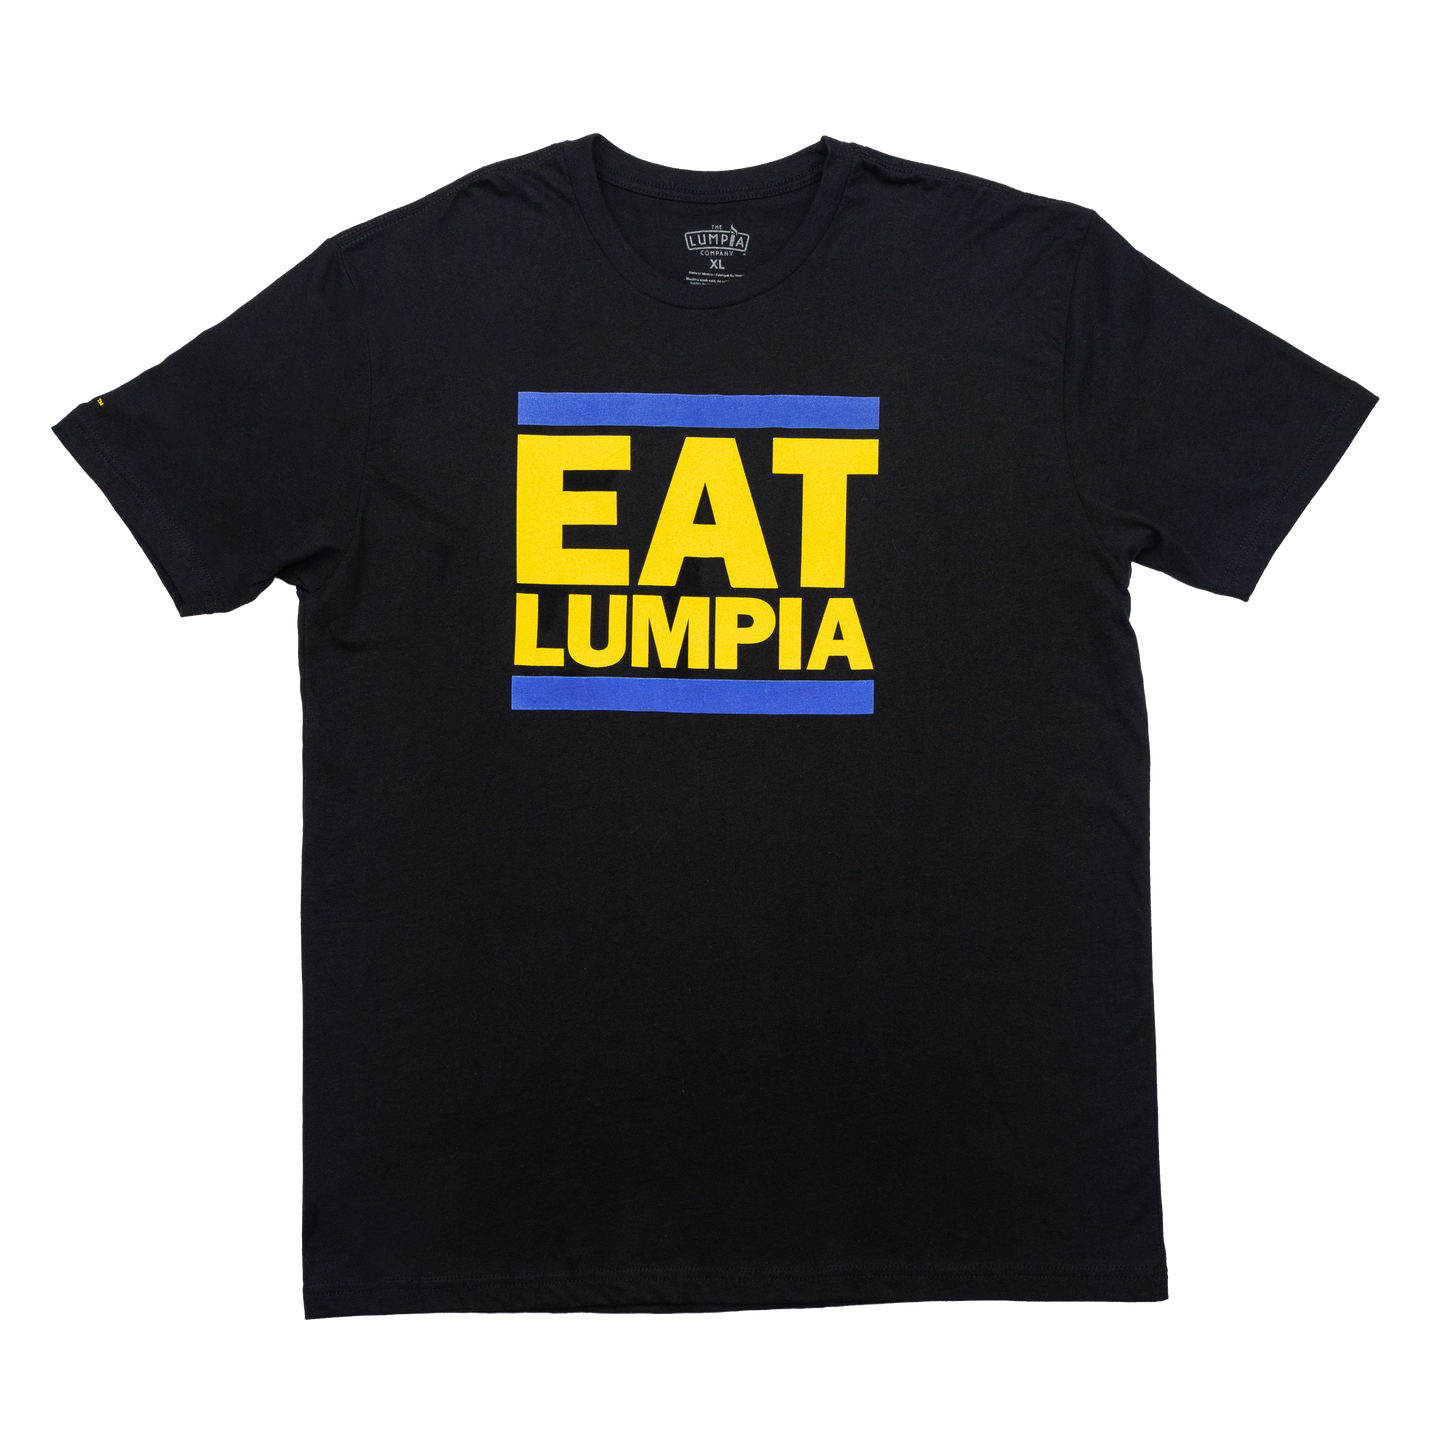 Eat Lumpia T-Shirt Warriors Inspired (Black x Gold x Blue)